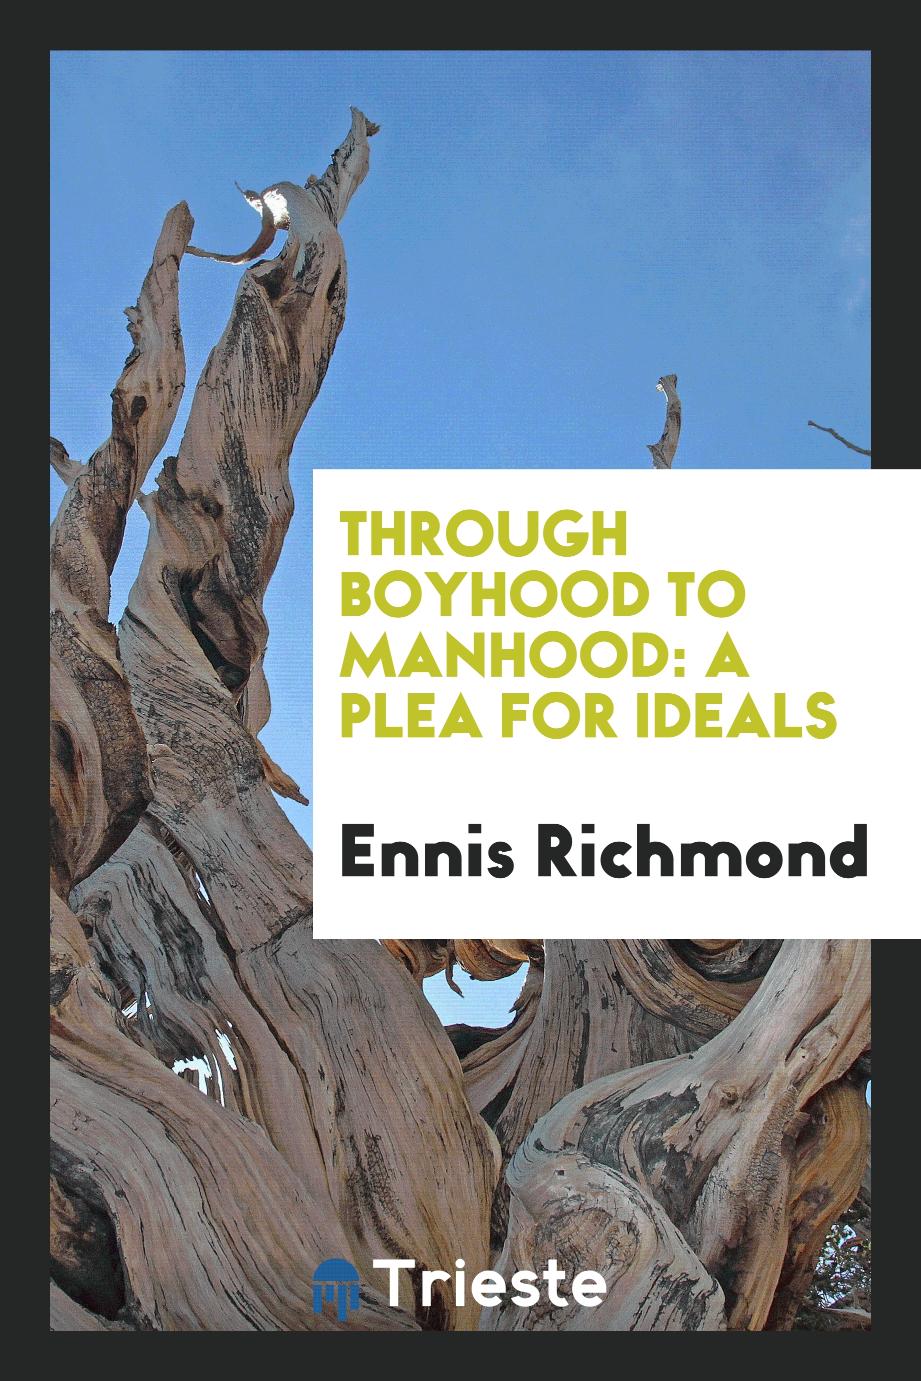 Through Boyhood to Manhood: A Plea for Ideals